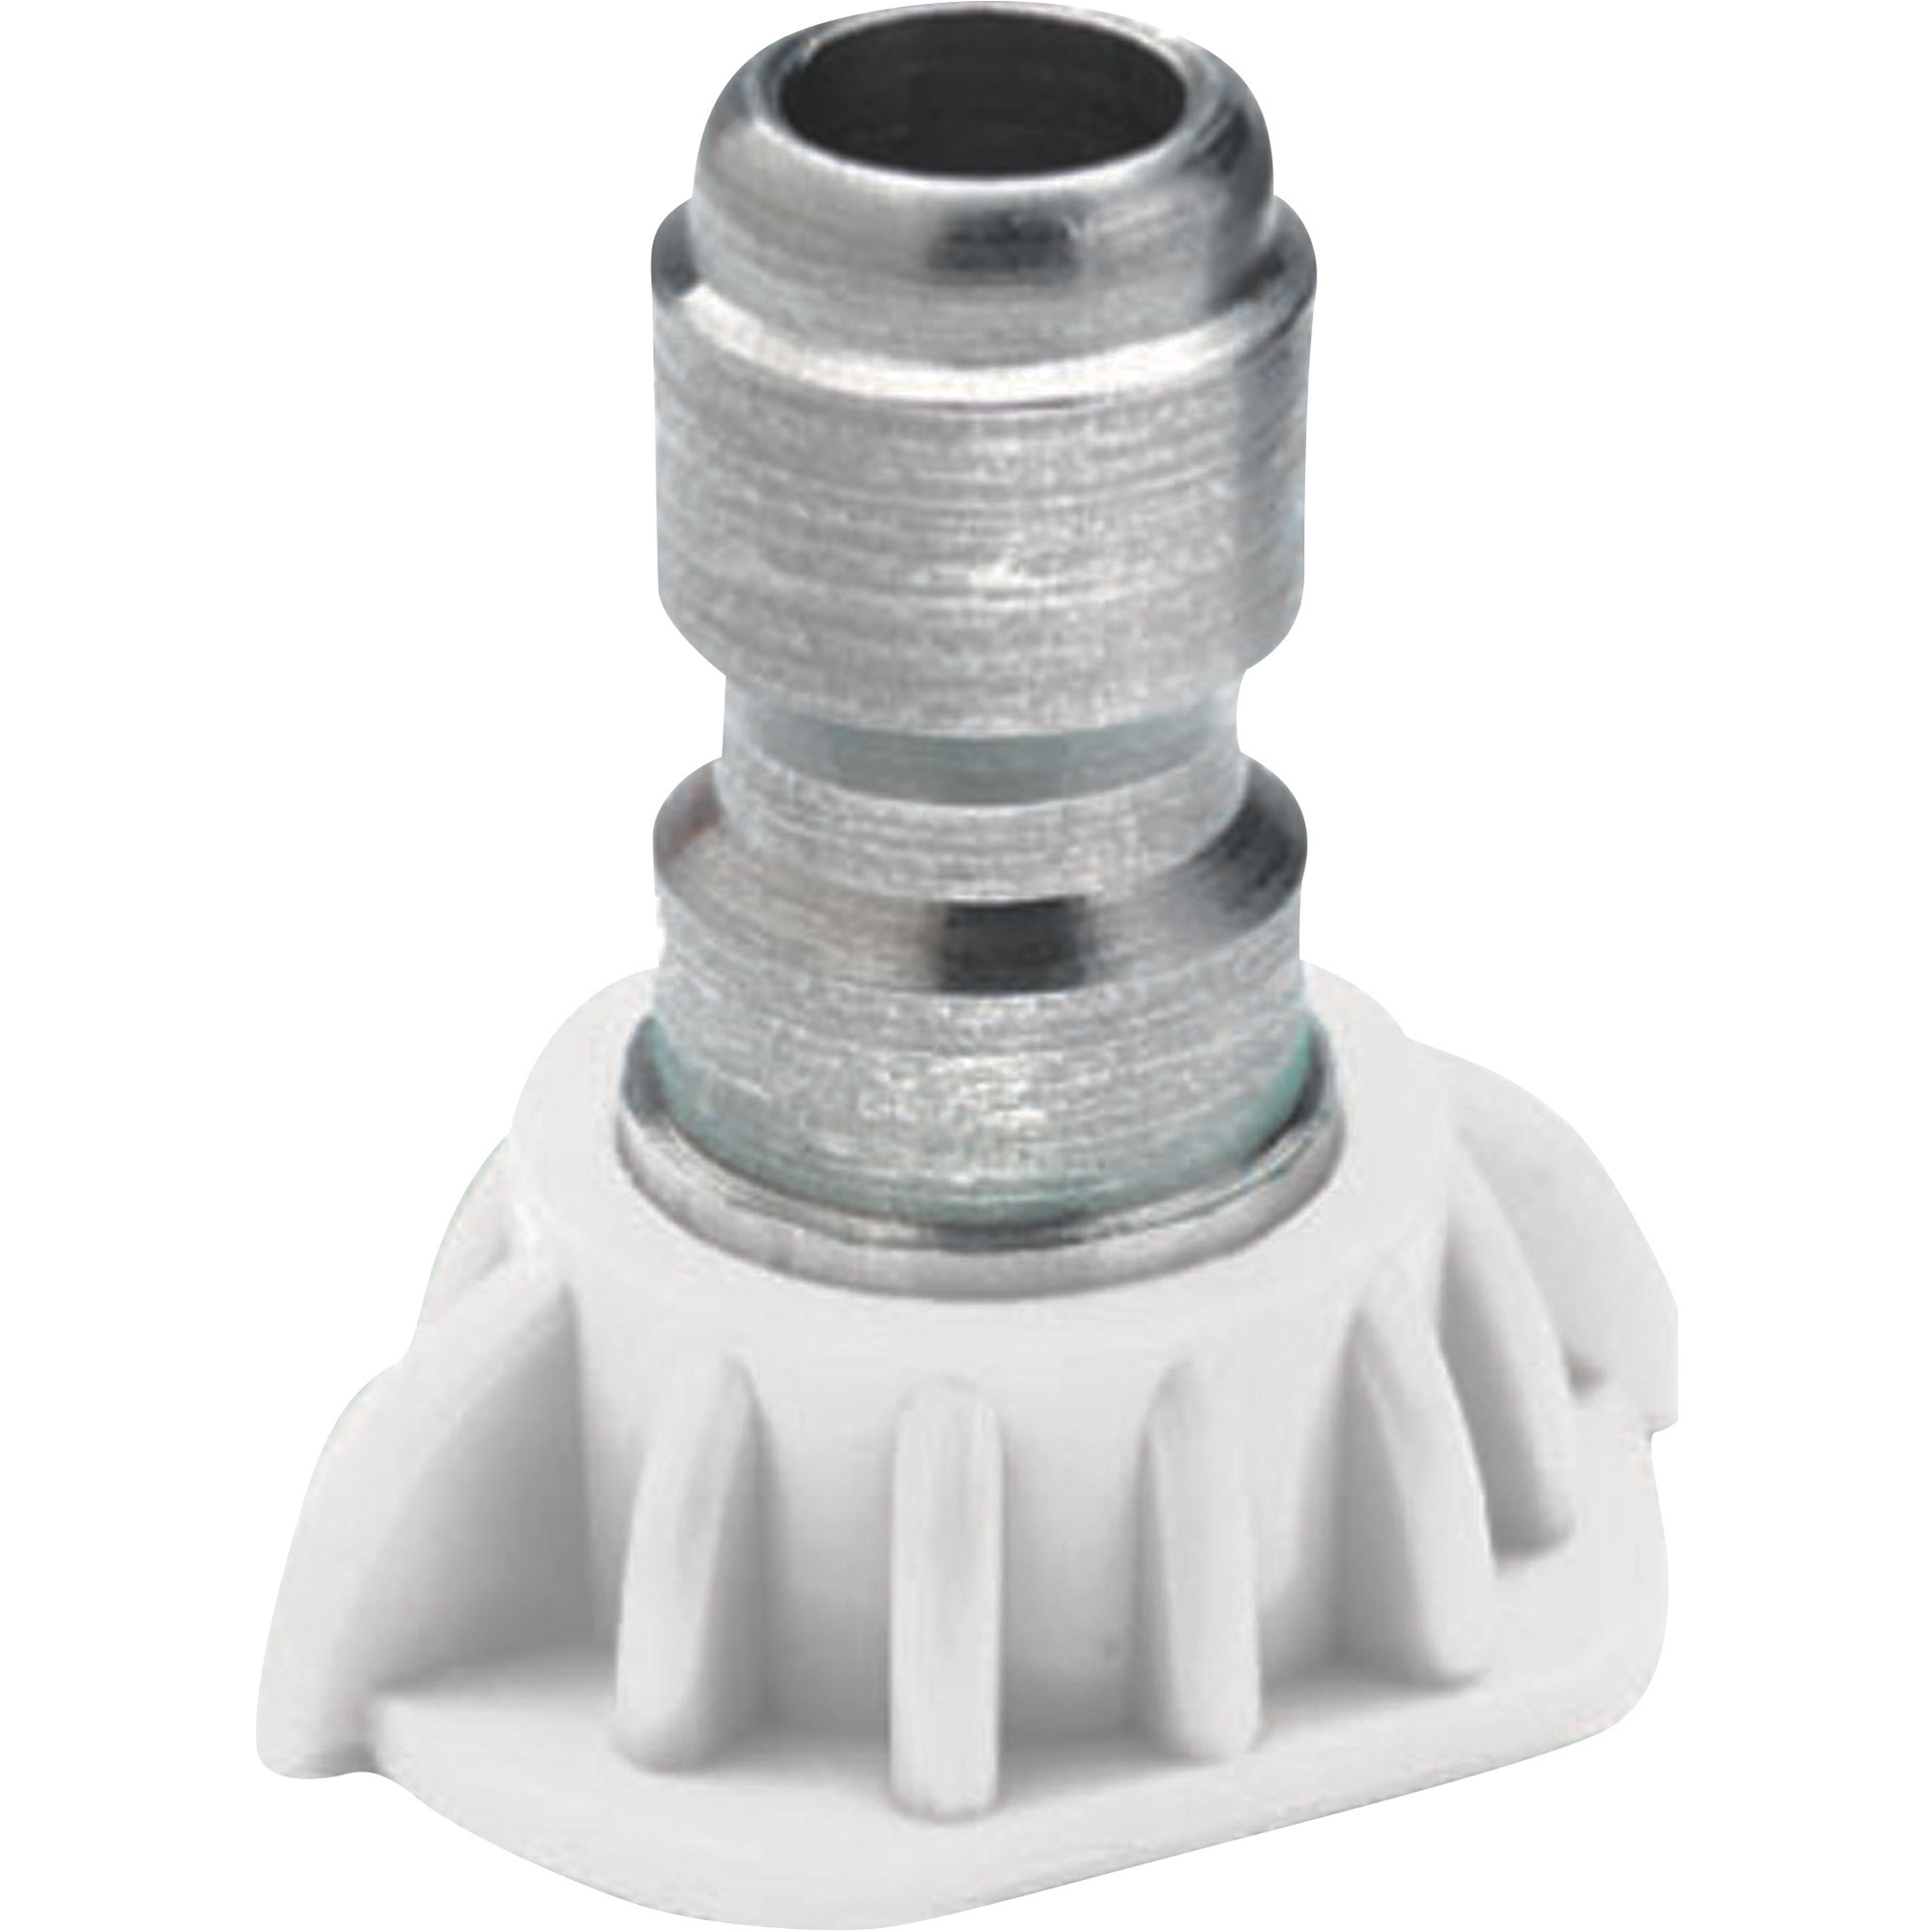 NorthStar Pressure Washer Quick Couple Spray Nozzle â 3.0 Size, 40 Degree Spray, Model N40030QP